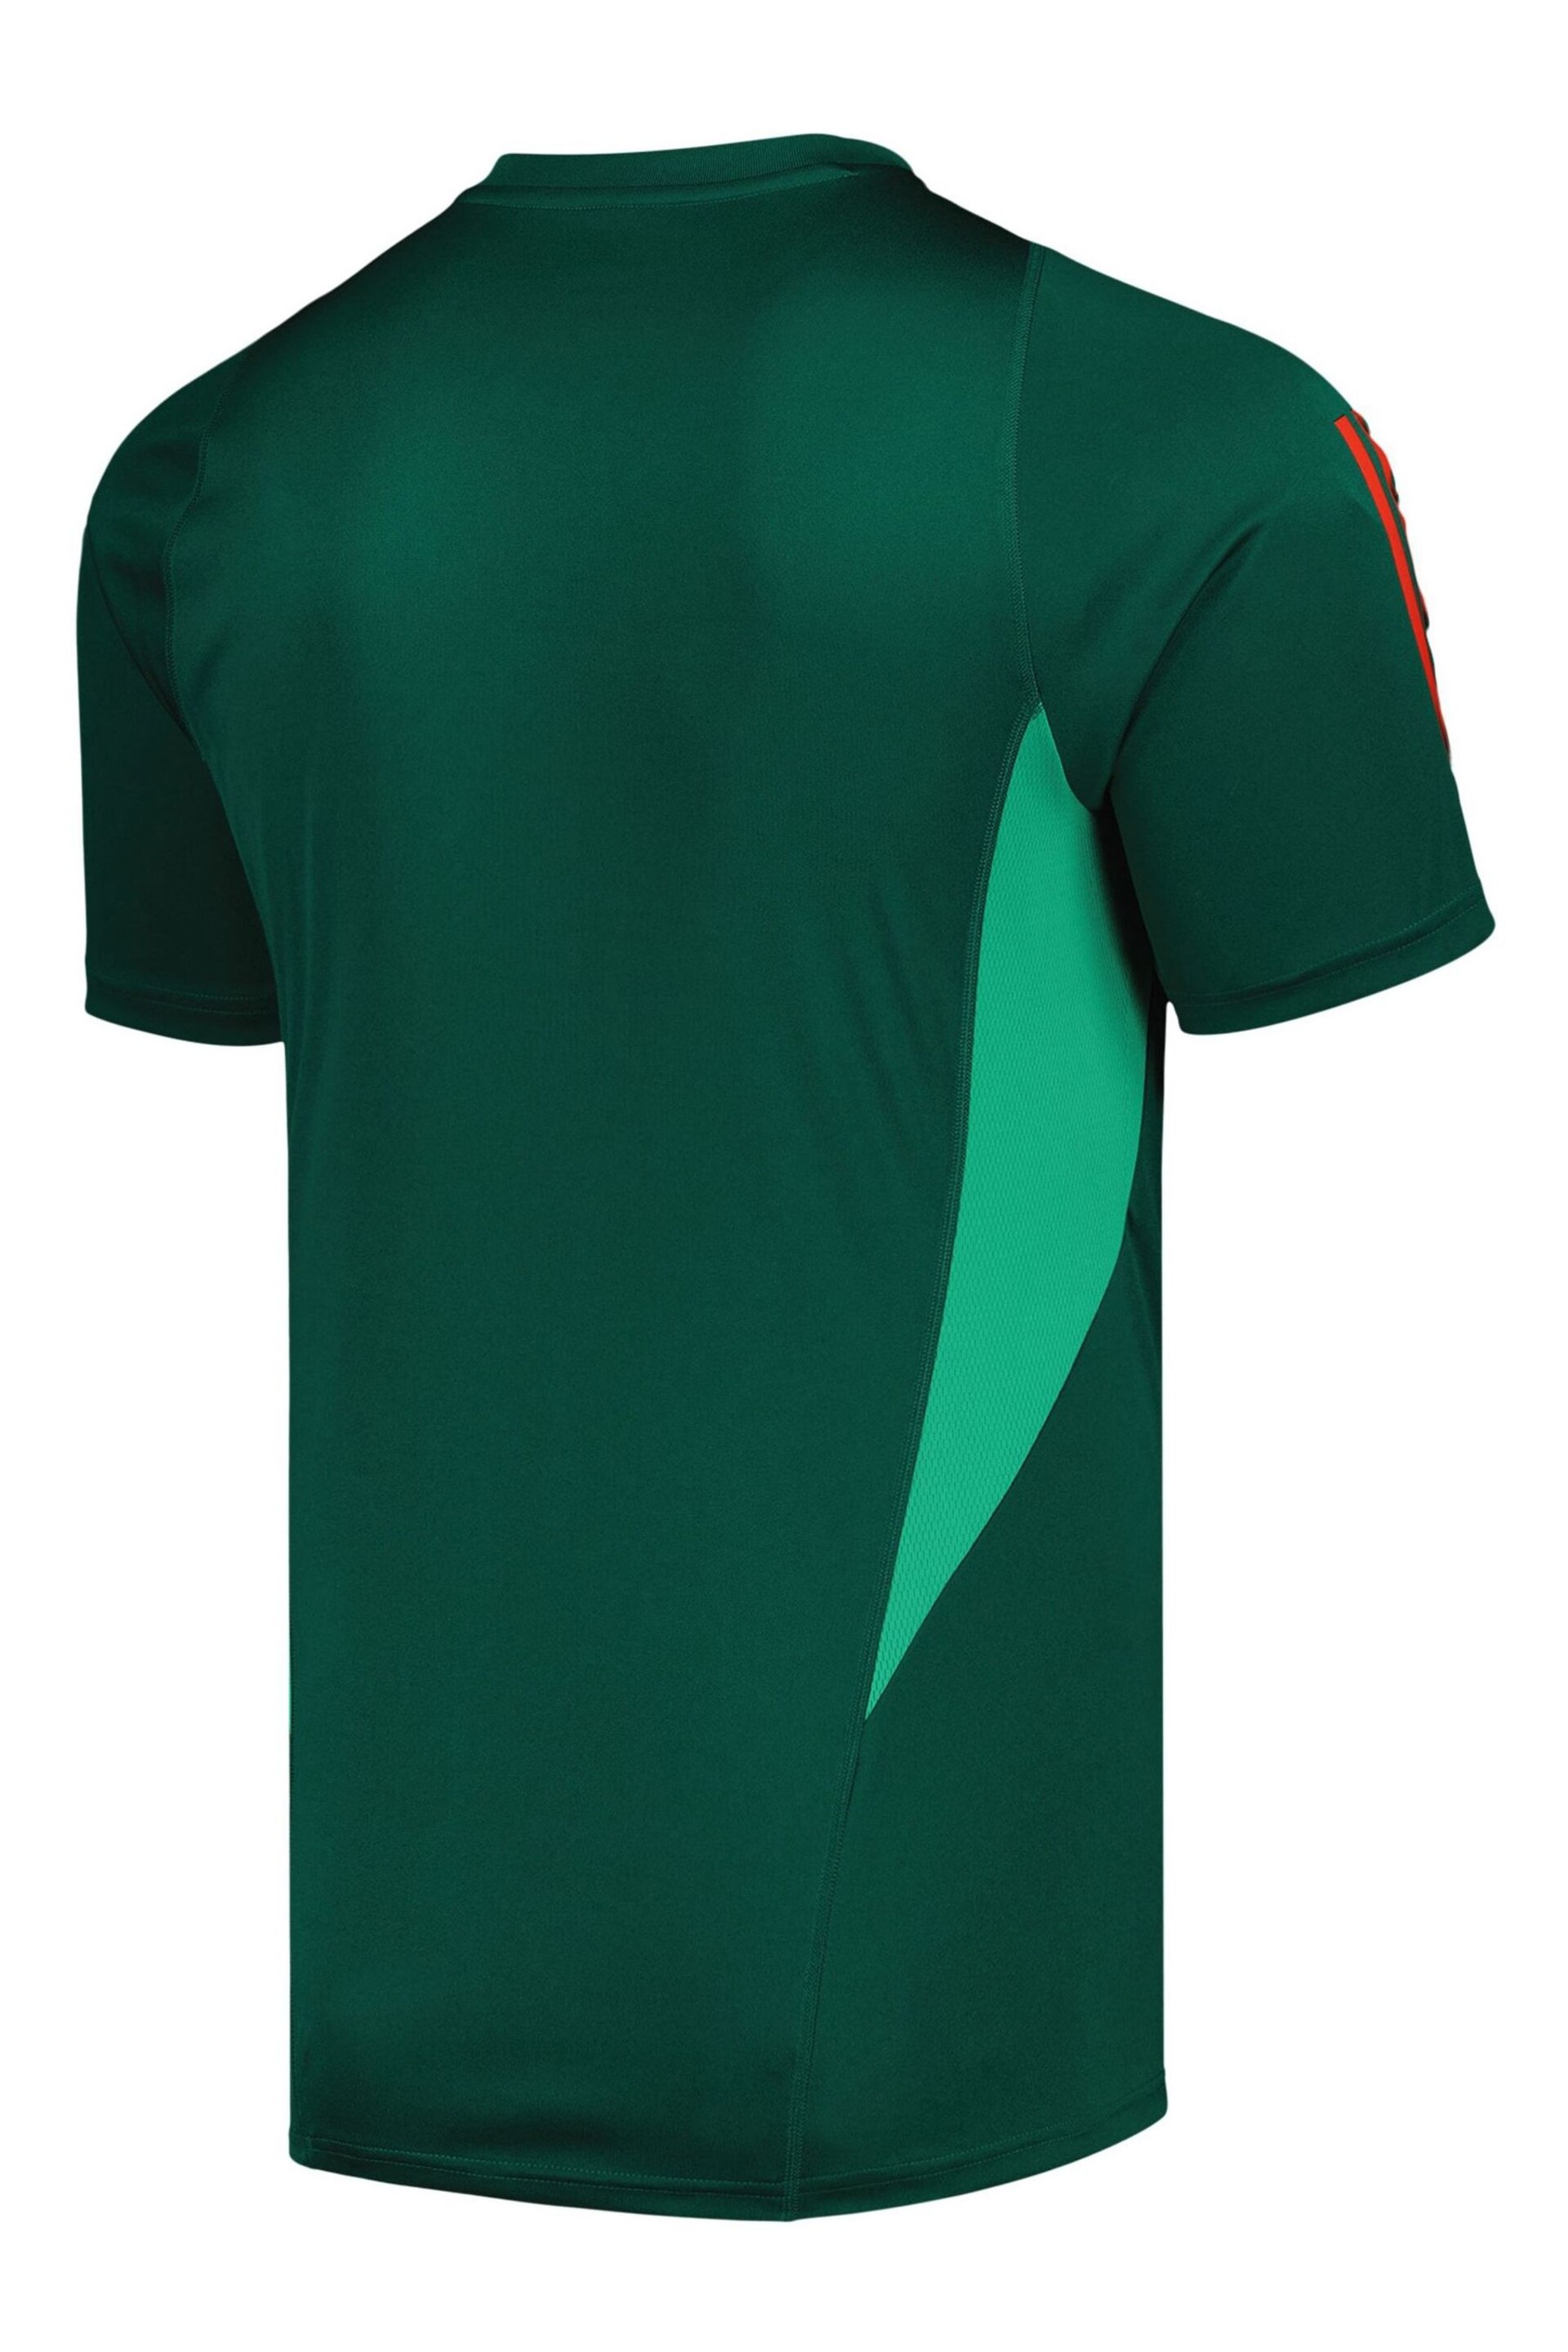 adidas Green Manchester United Training Shirt - Image 3 of 3